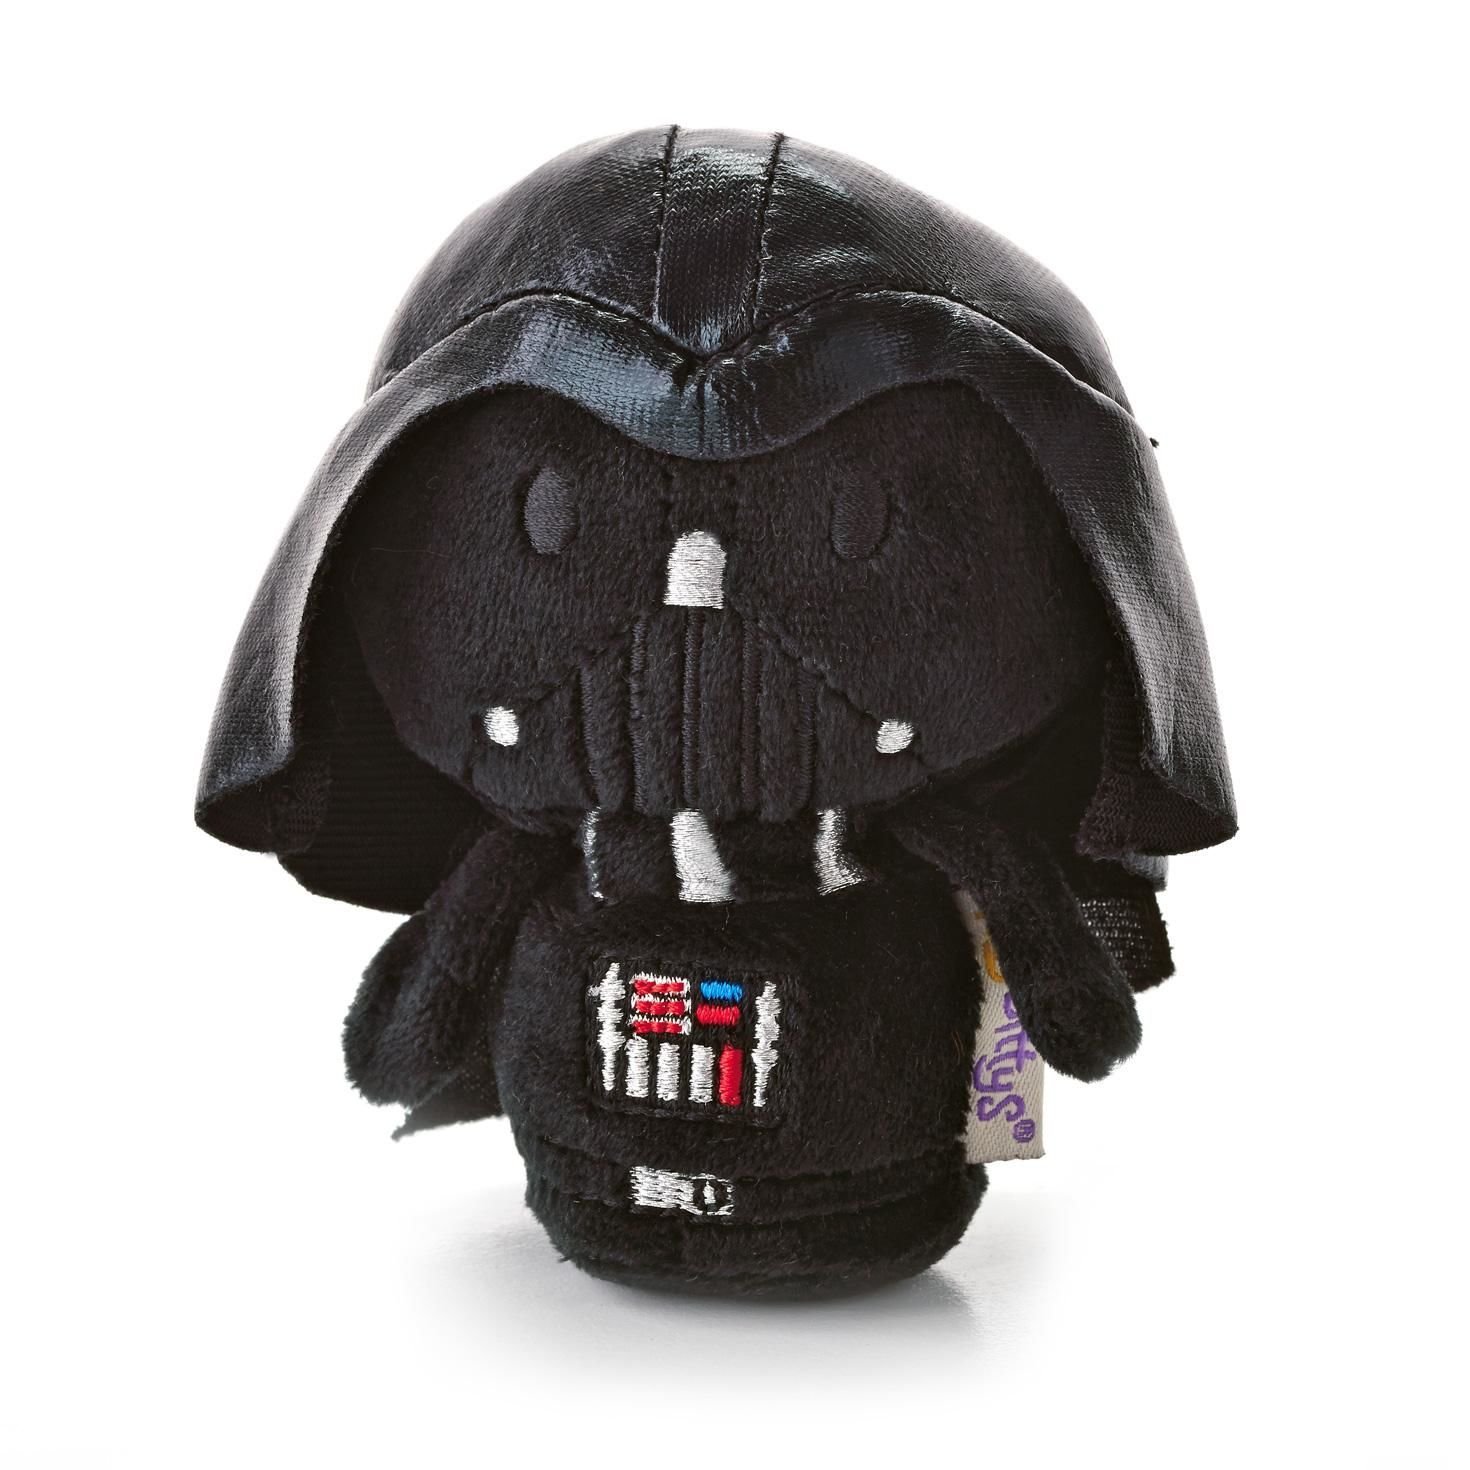 Darth Vader Itty Bitty Mini Plush